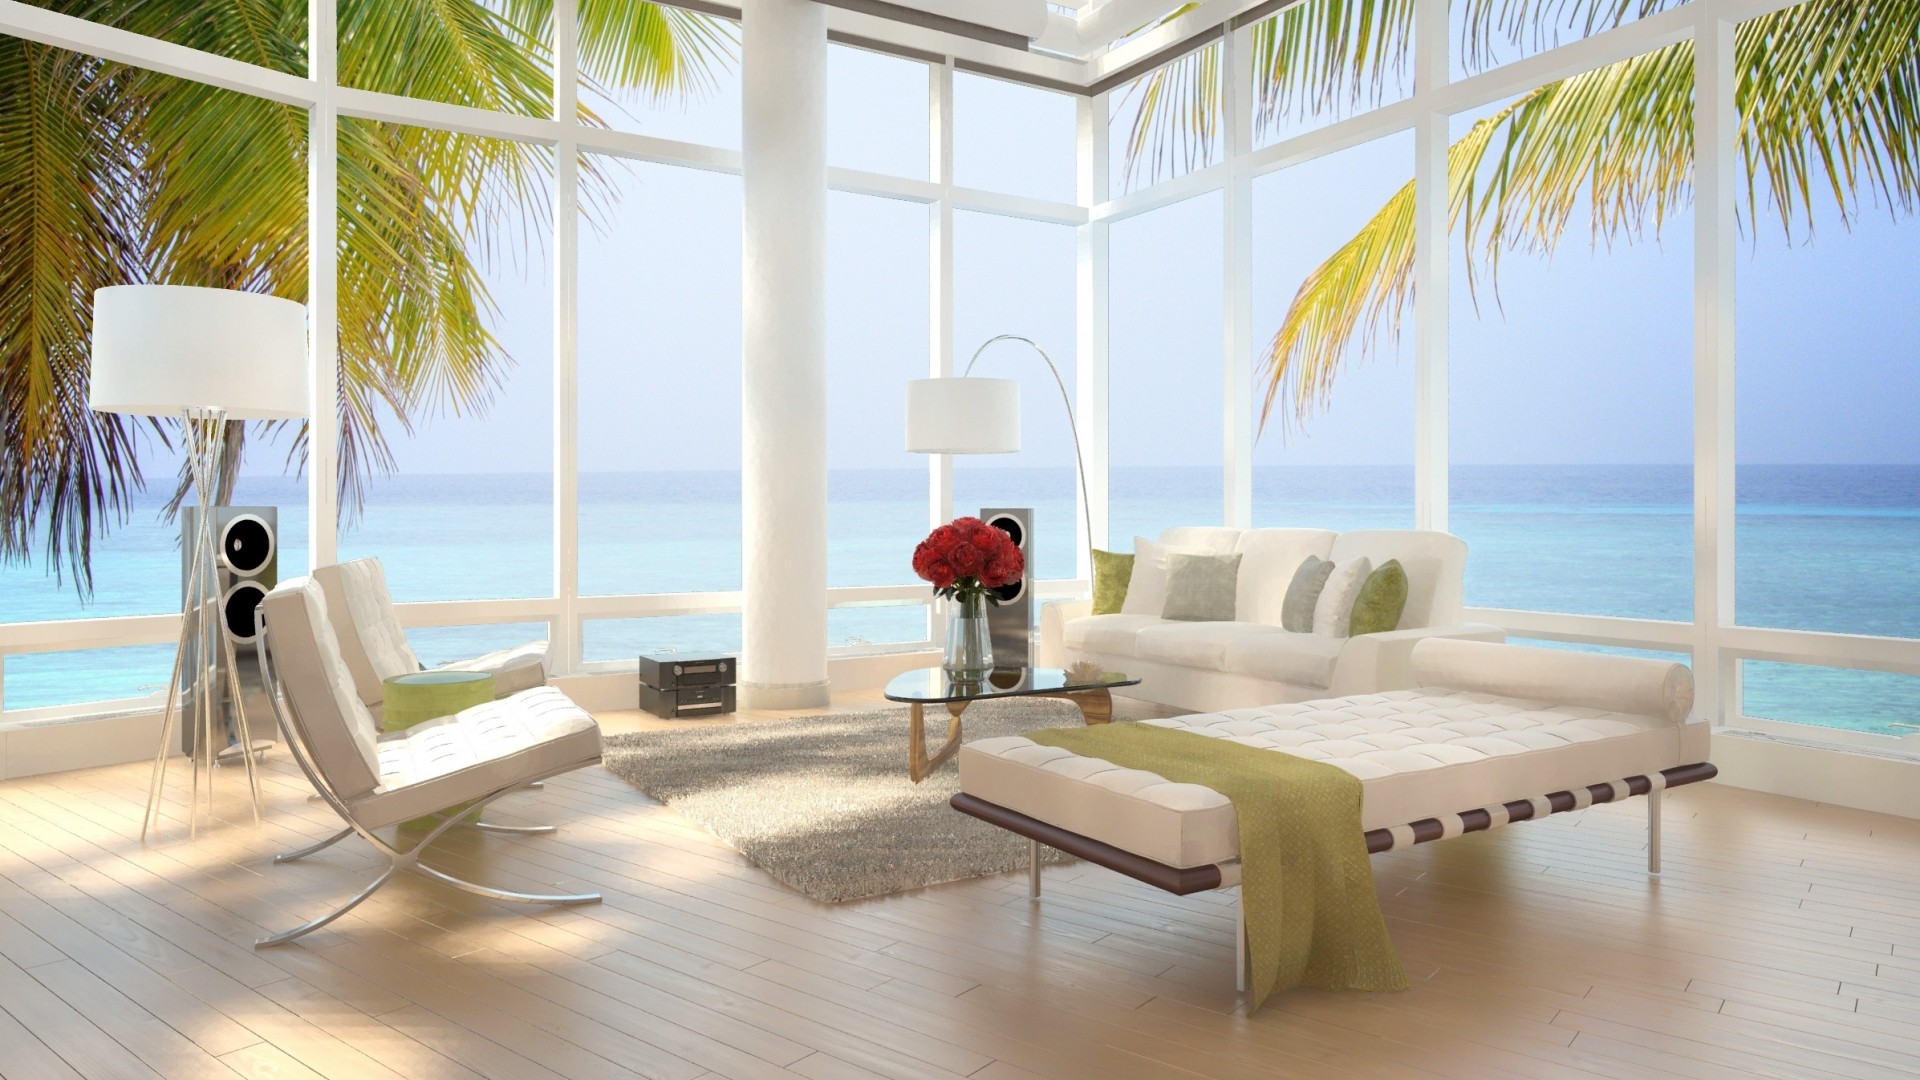 Download Wallpaper ocean sofa palm apartment apartments view, 1920x Luxury apartments with ocean views